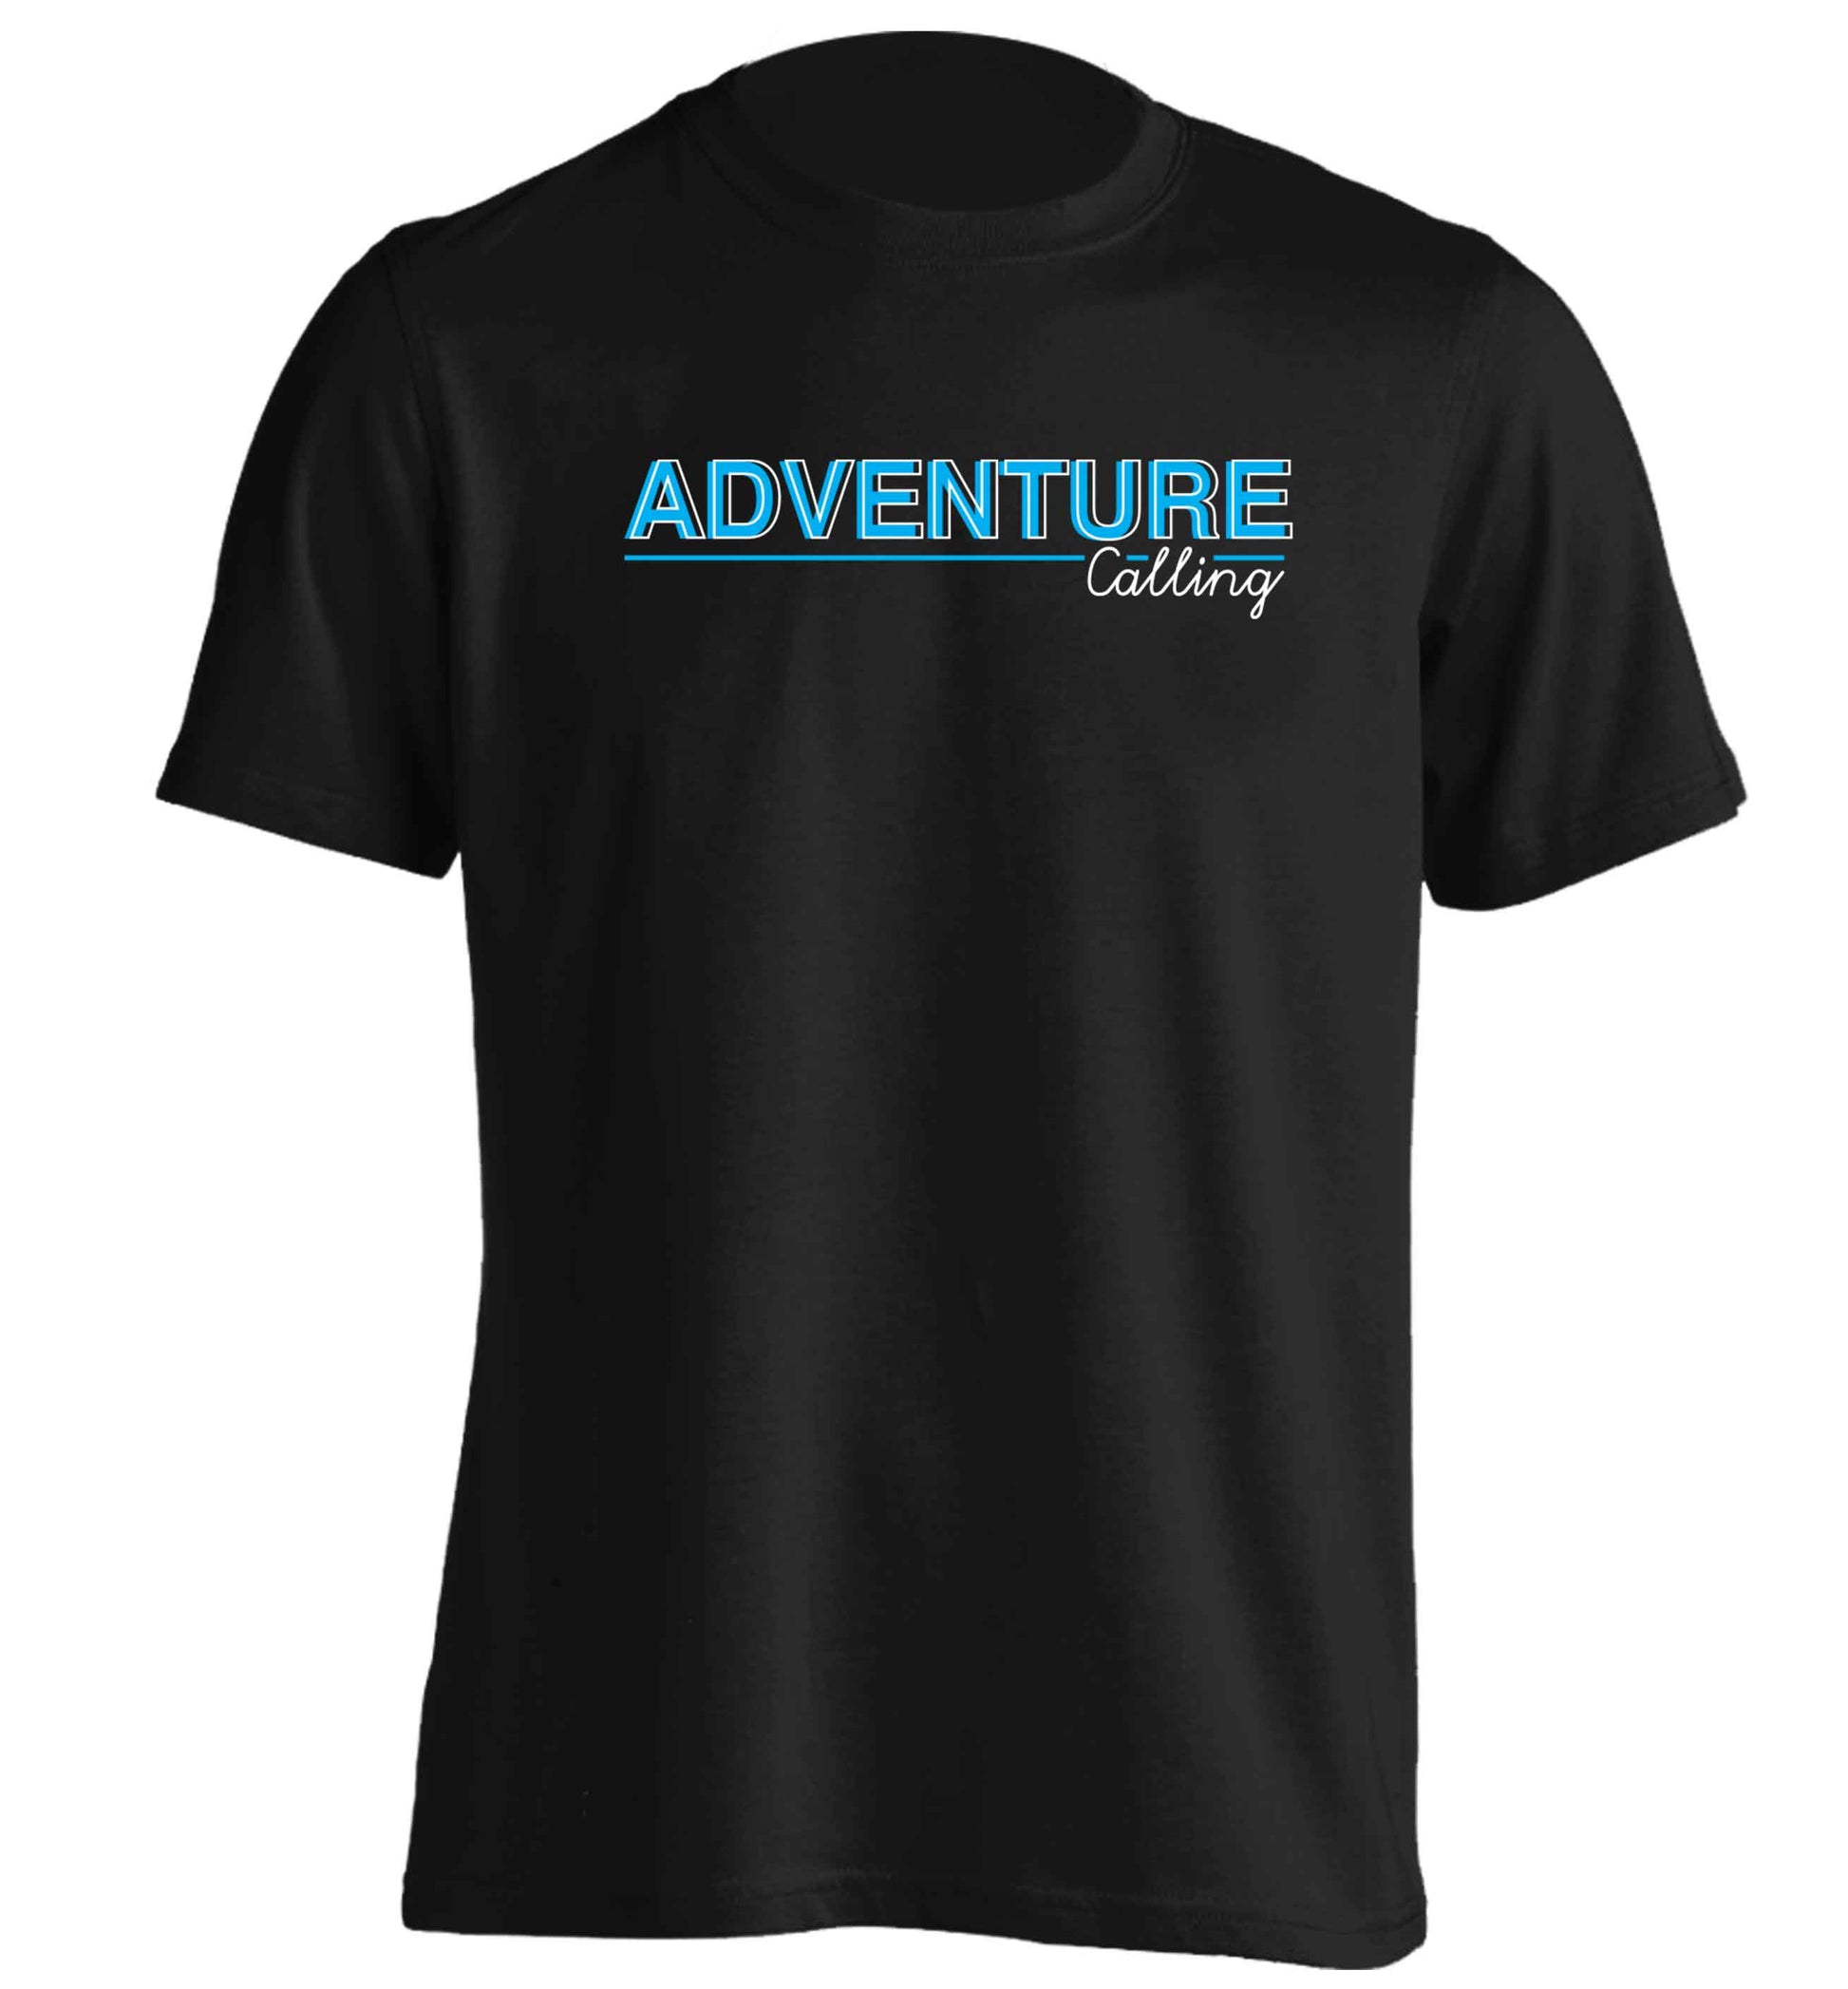 Adventure calling adults unisex black Tshirt 2XL